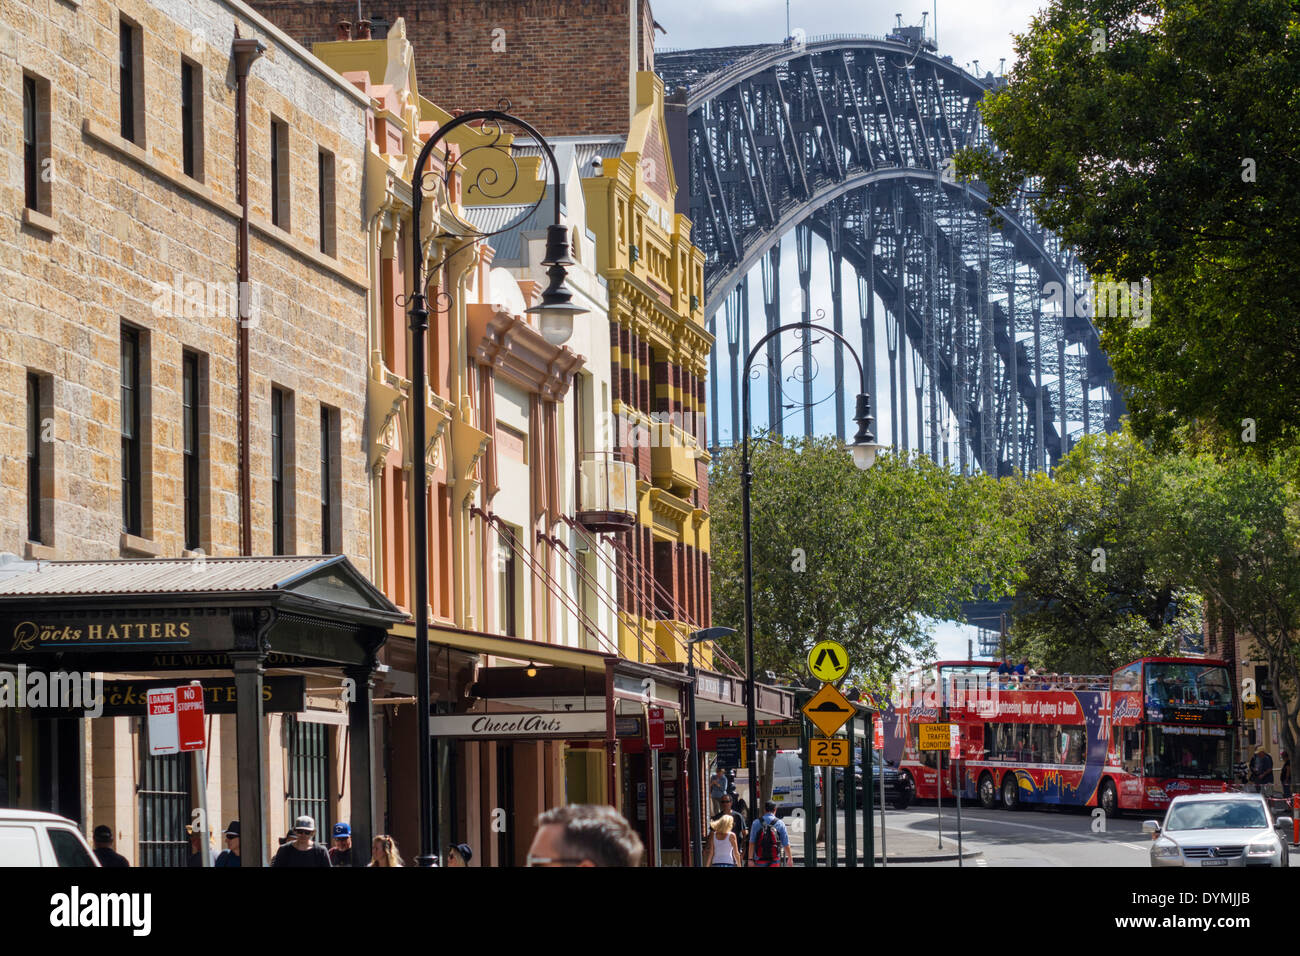 Sydney Australien, The Rocks Market, Bezirk, Gebäude, Sydney Harbour  Bridge, Hafen, AU140308064 Stockfotografie - Alamy